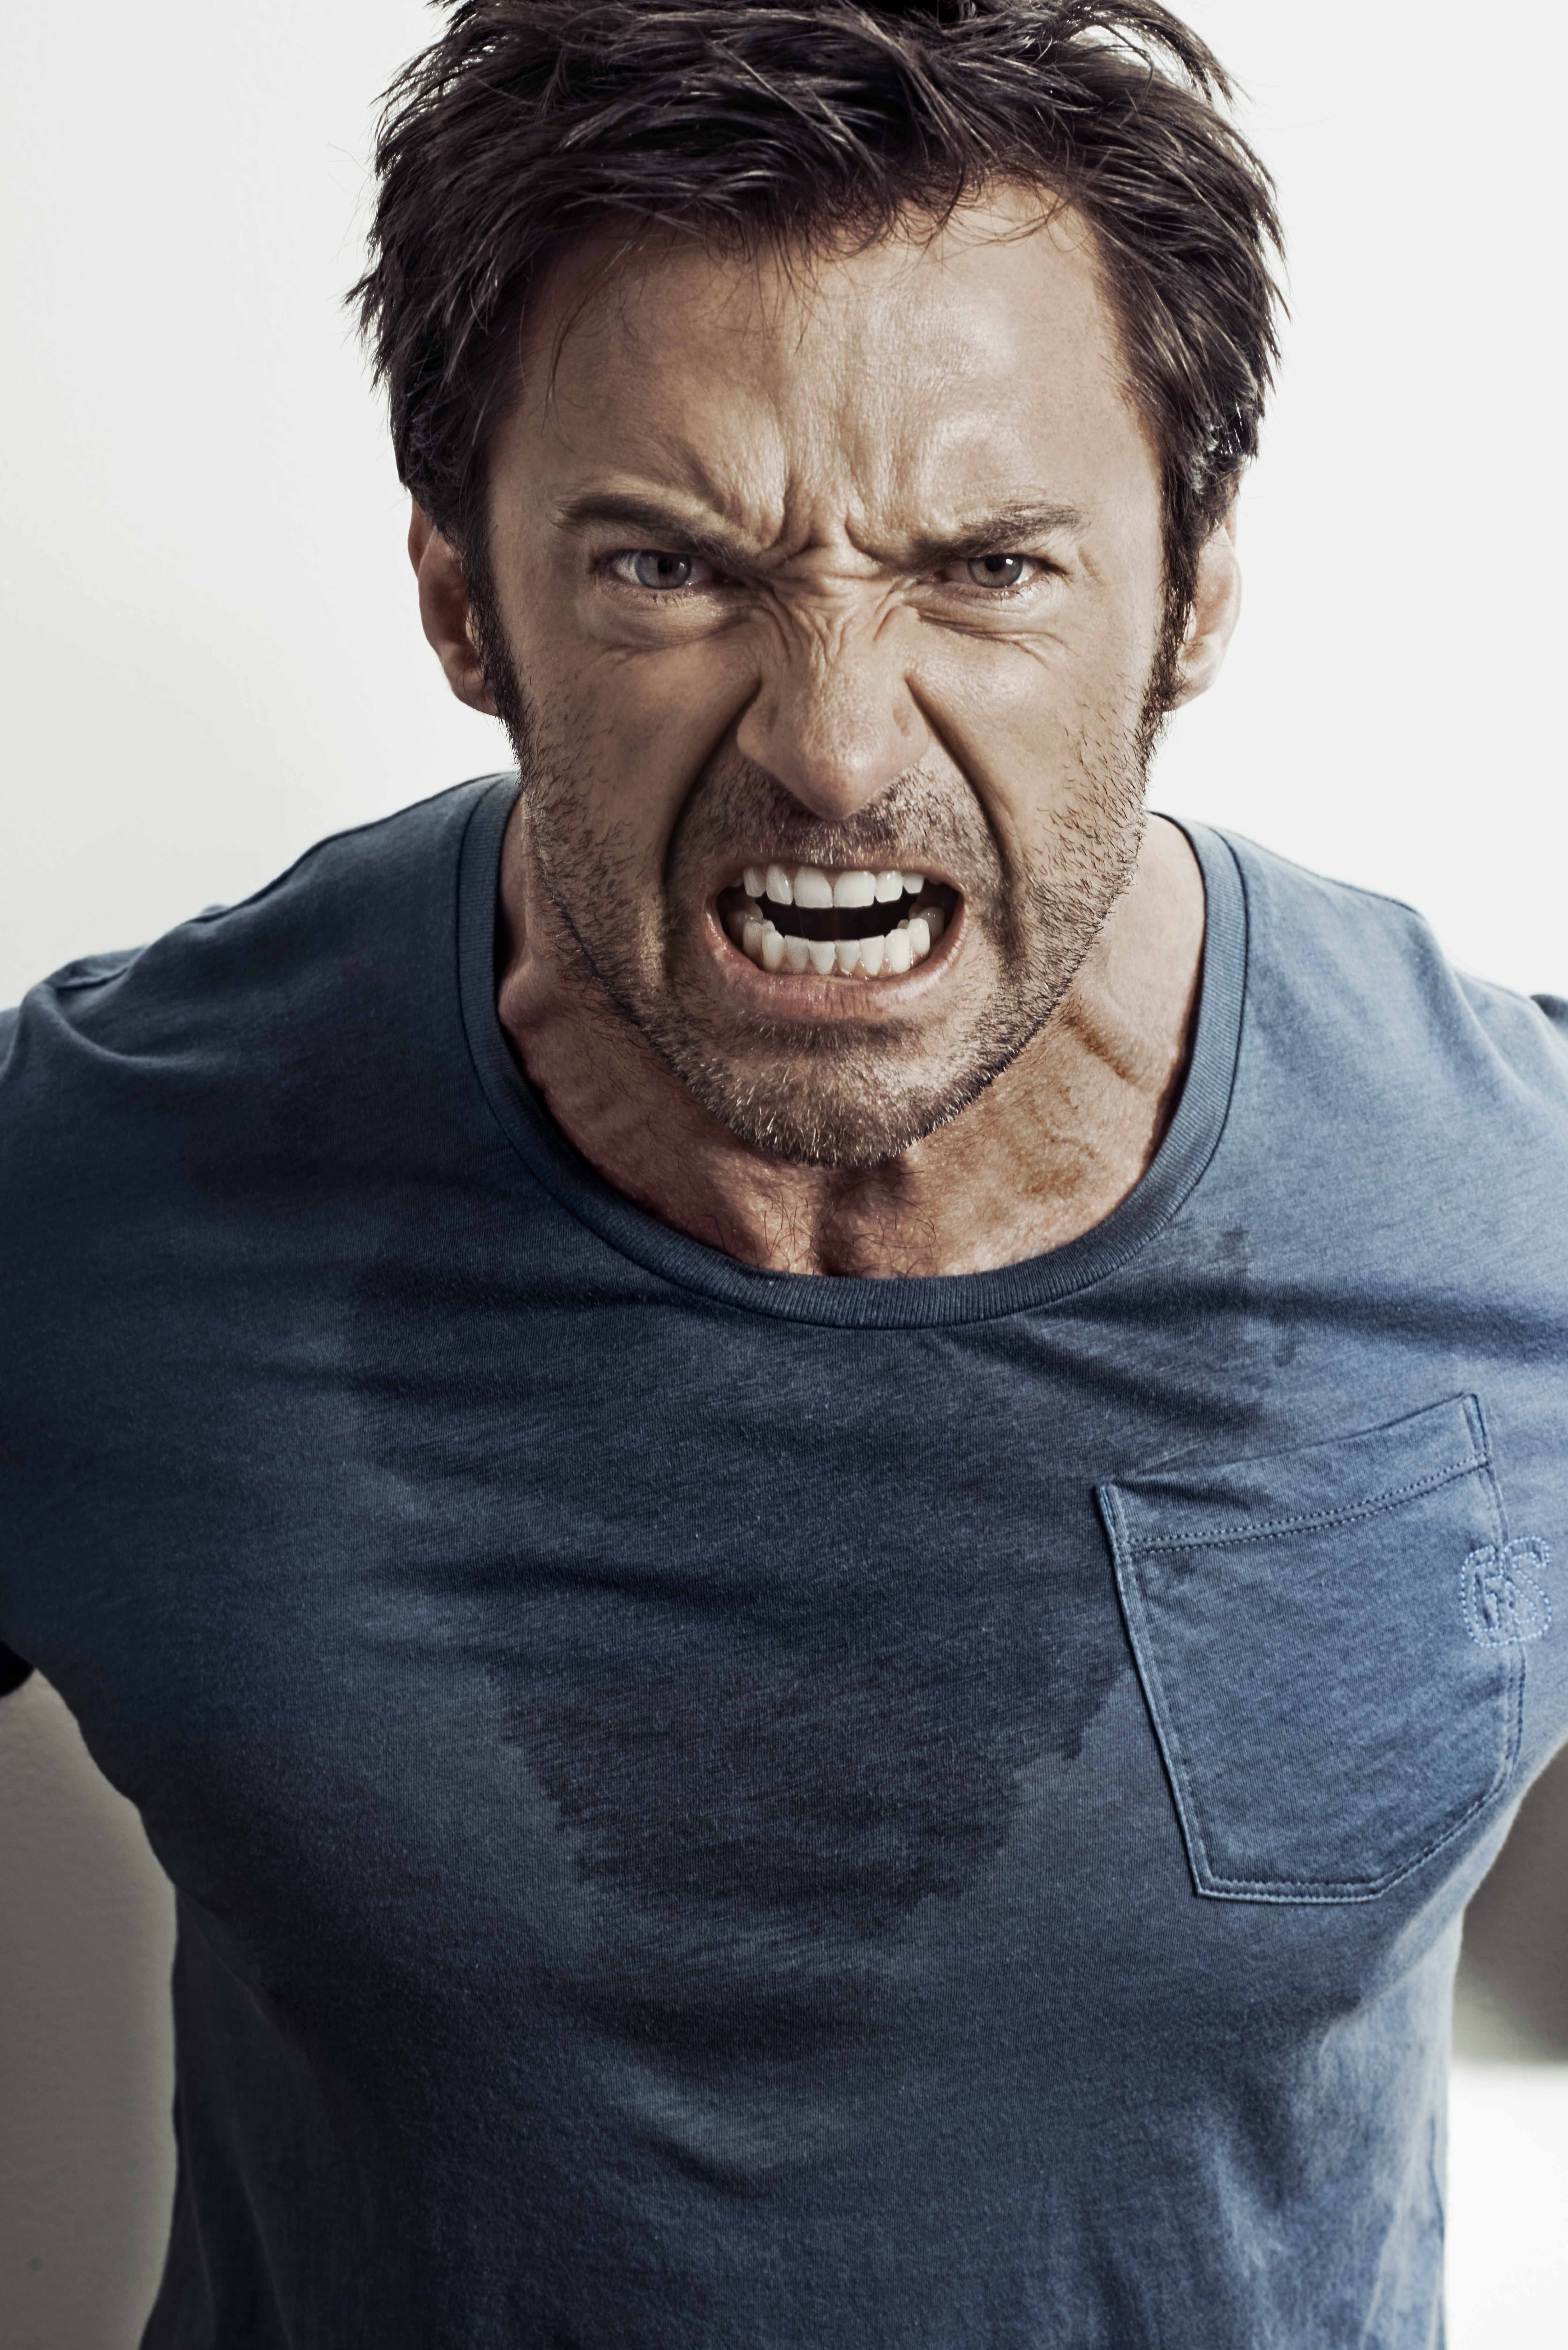 Who's hotter: X-Men's Hugh Jackman vs. Michael Fassbender